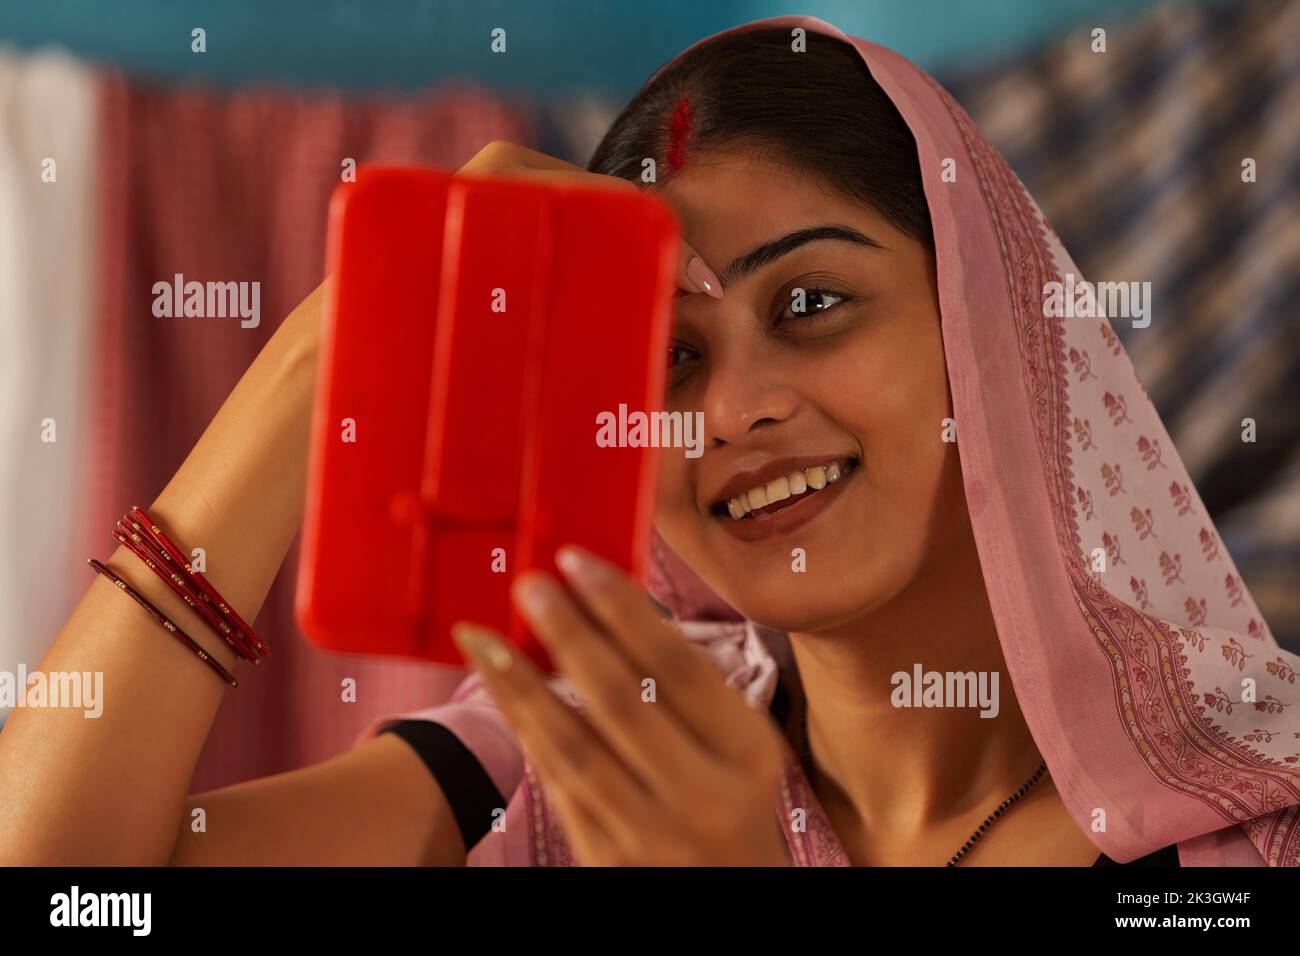 Portrait of Bihar woman applying bindi on forehead Stock Photo